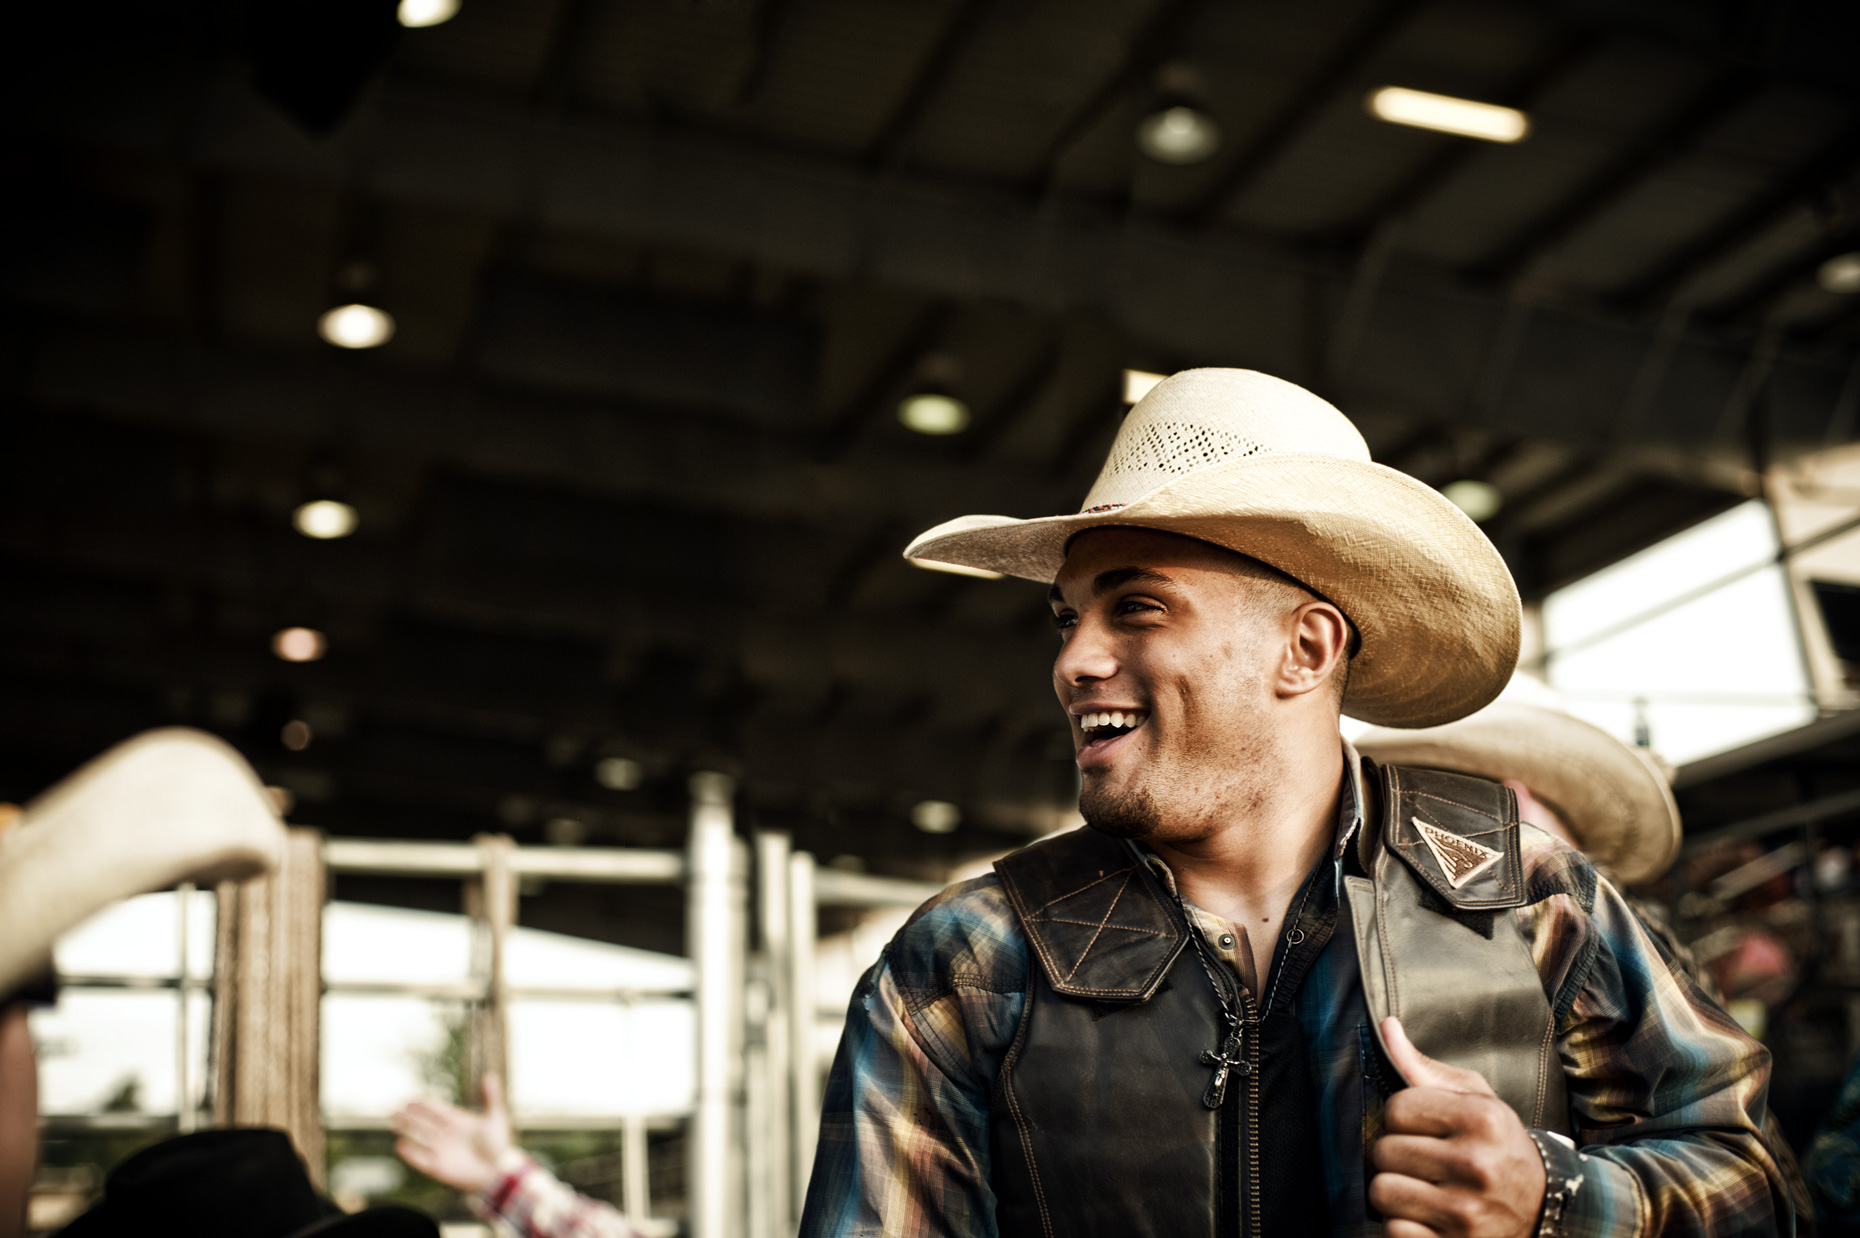 cowboy_rodeo_smiling.jpg